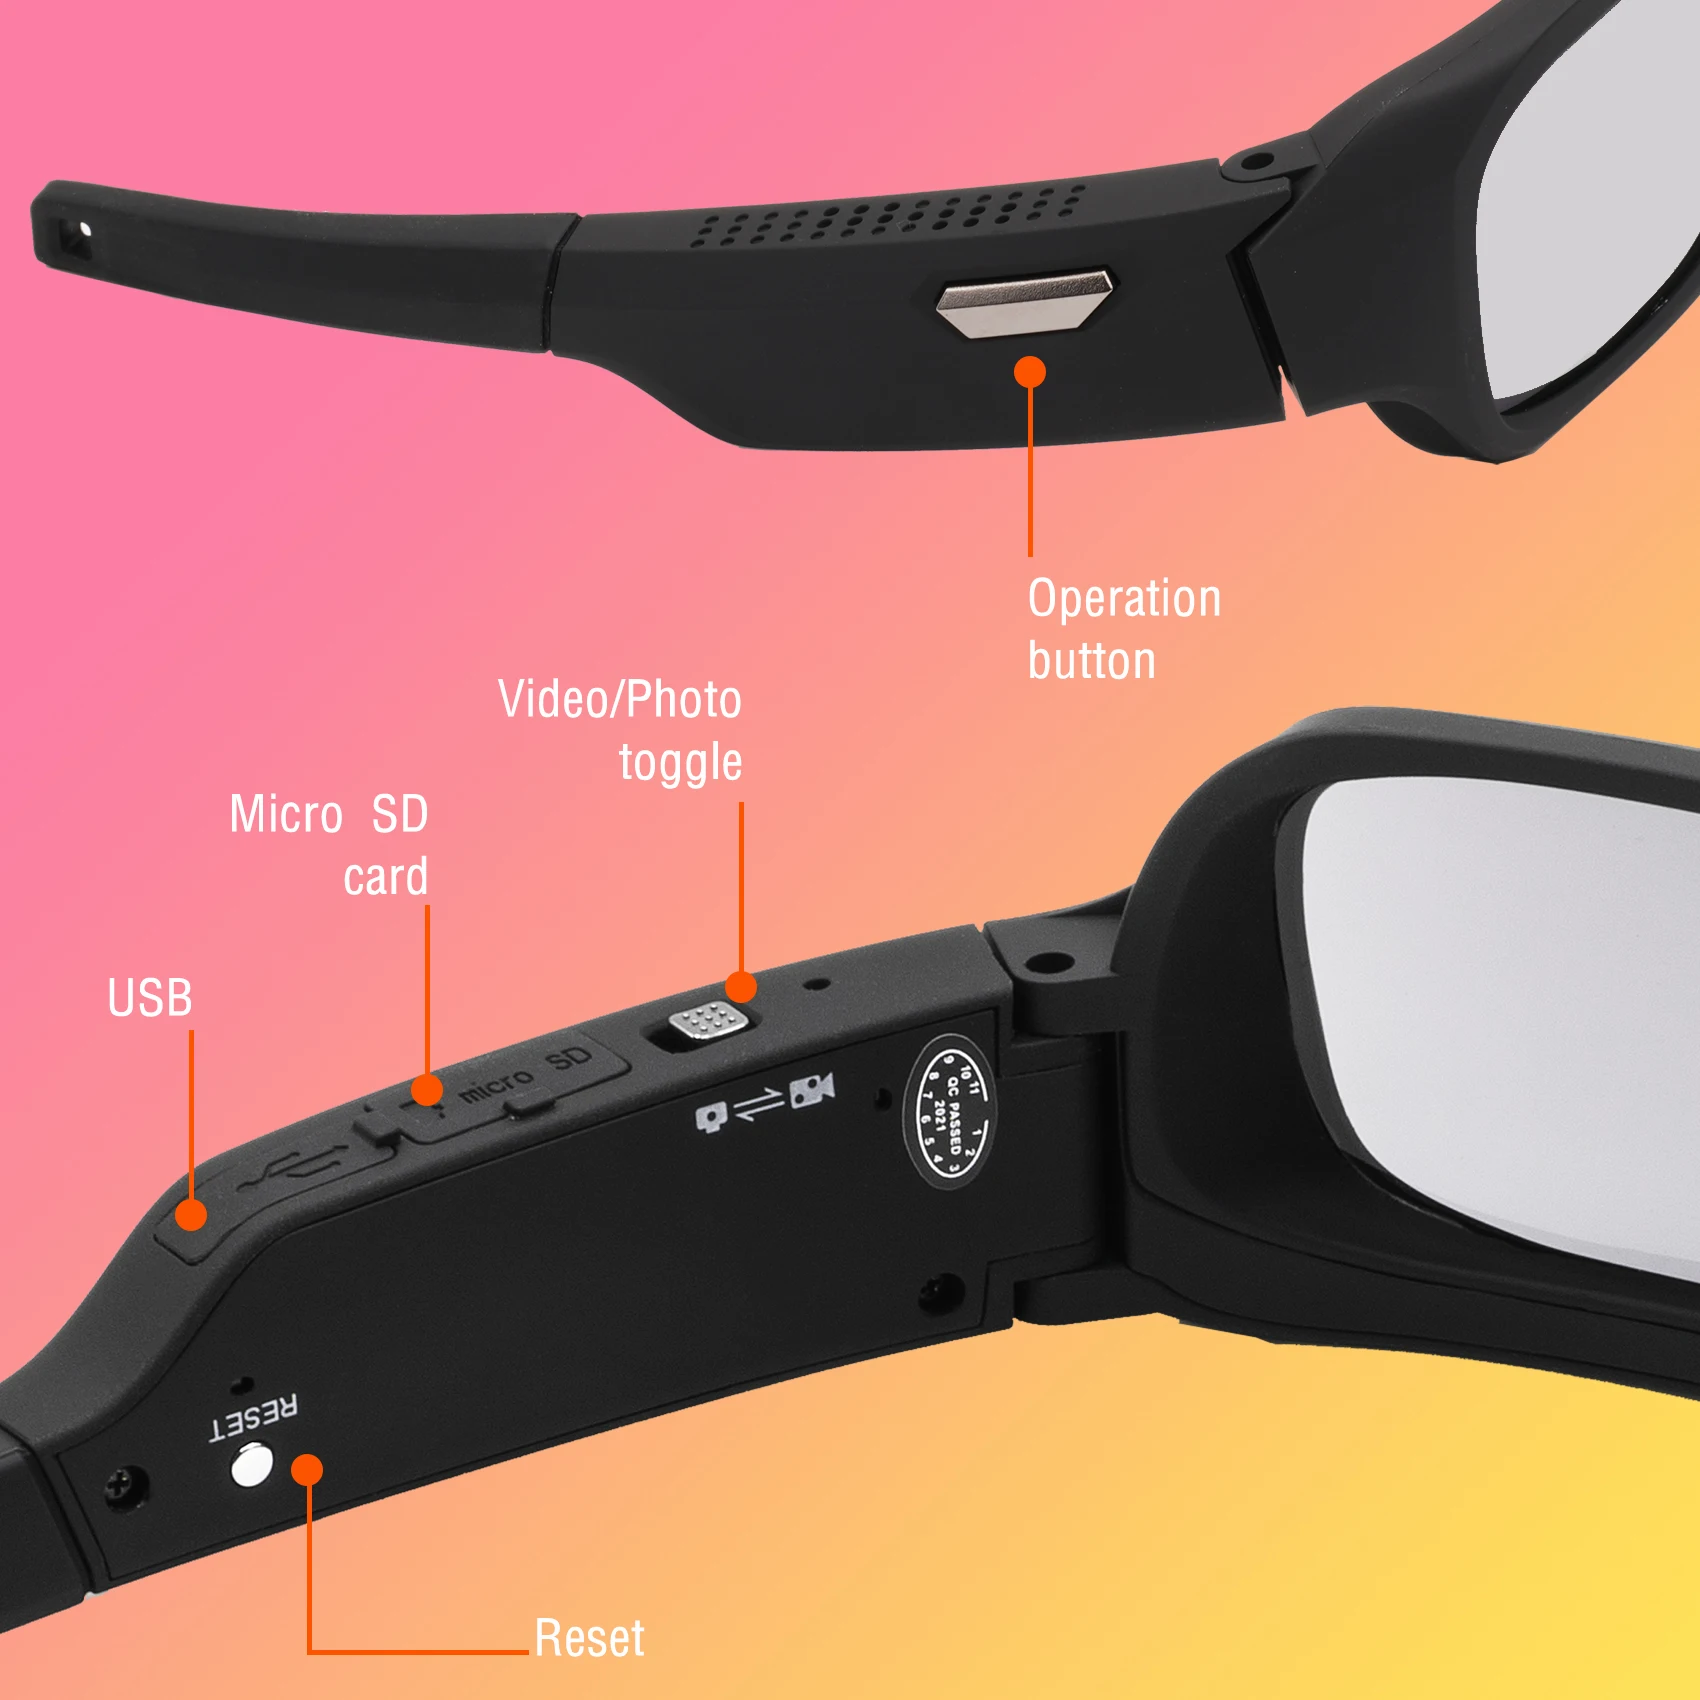 Camera Glasses 2K Video 4k Photo Sport Sunglasses Recording Eyewear, POV, Polarized Lens, Great Gift Idea enlarge